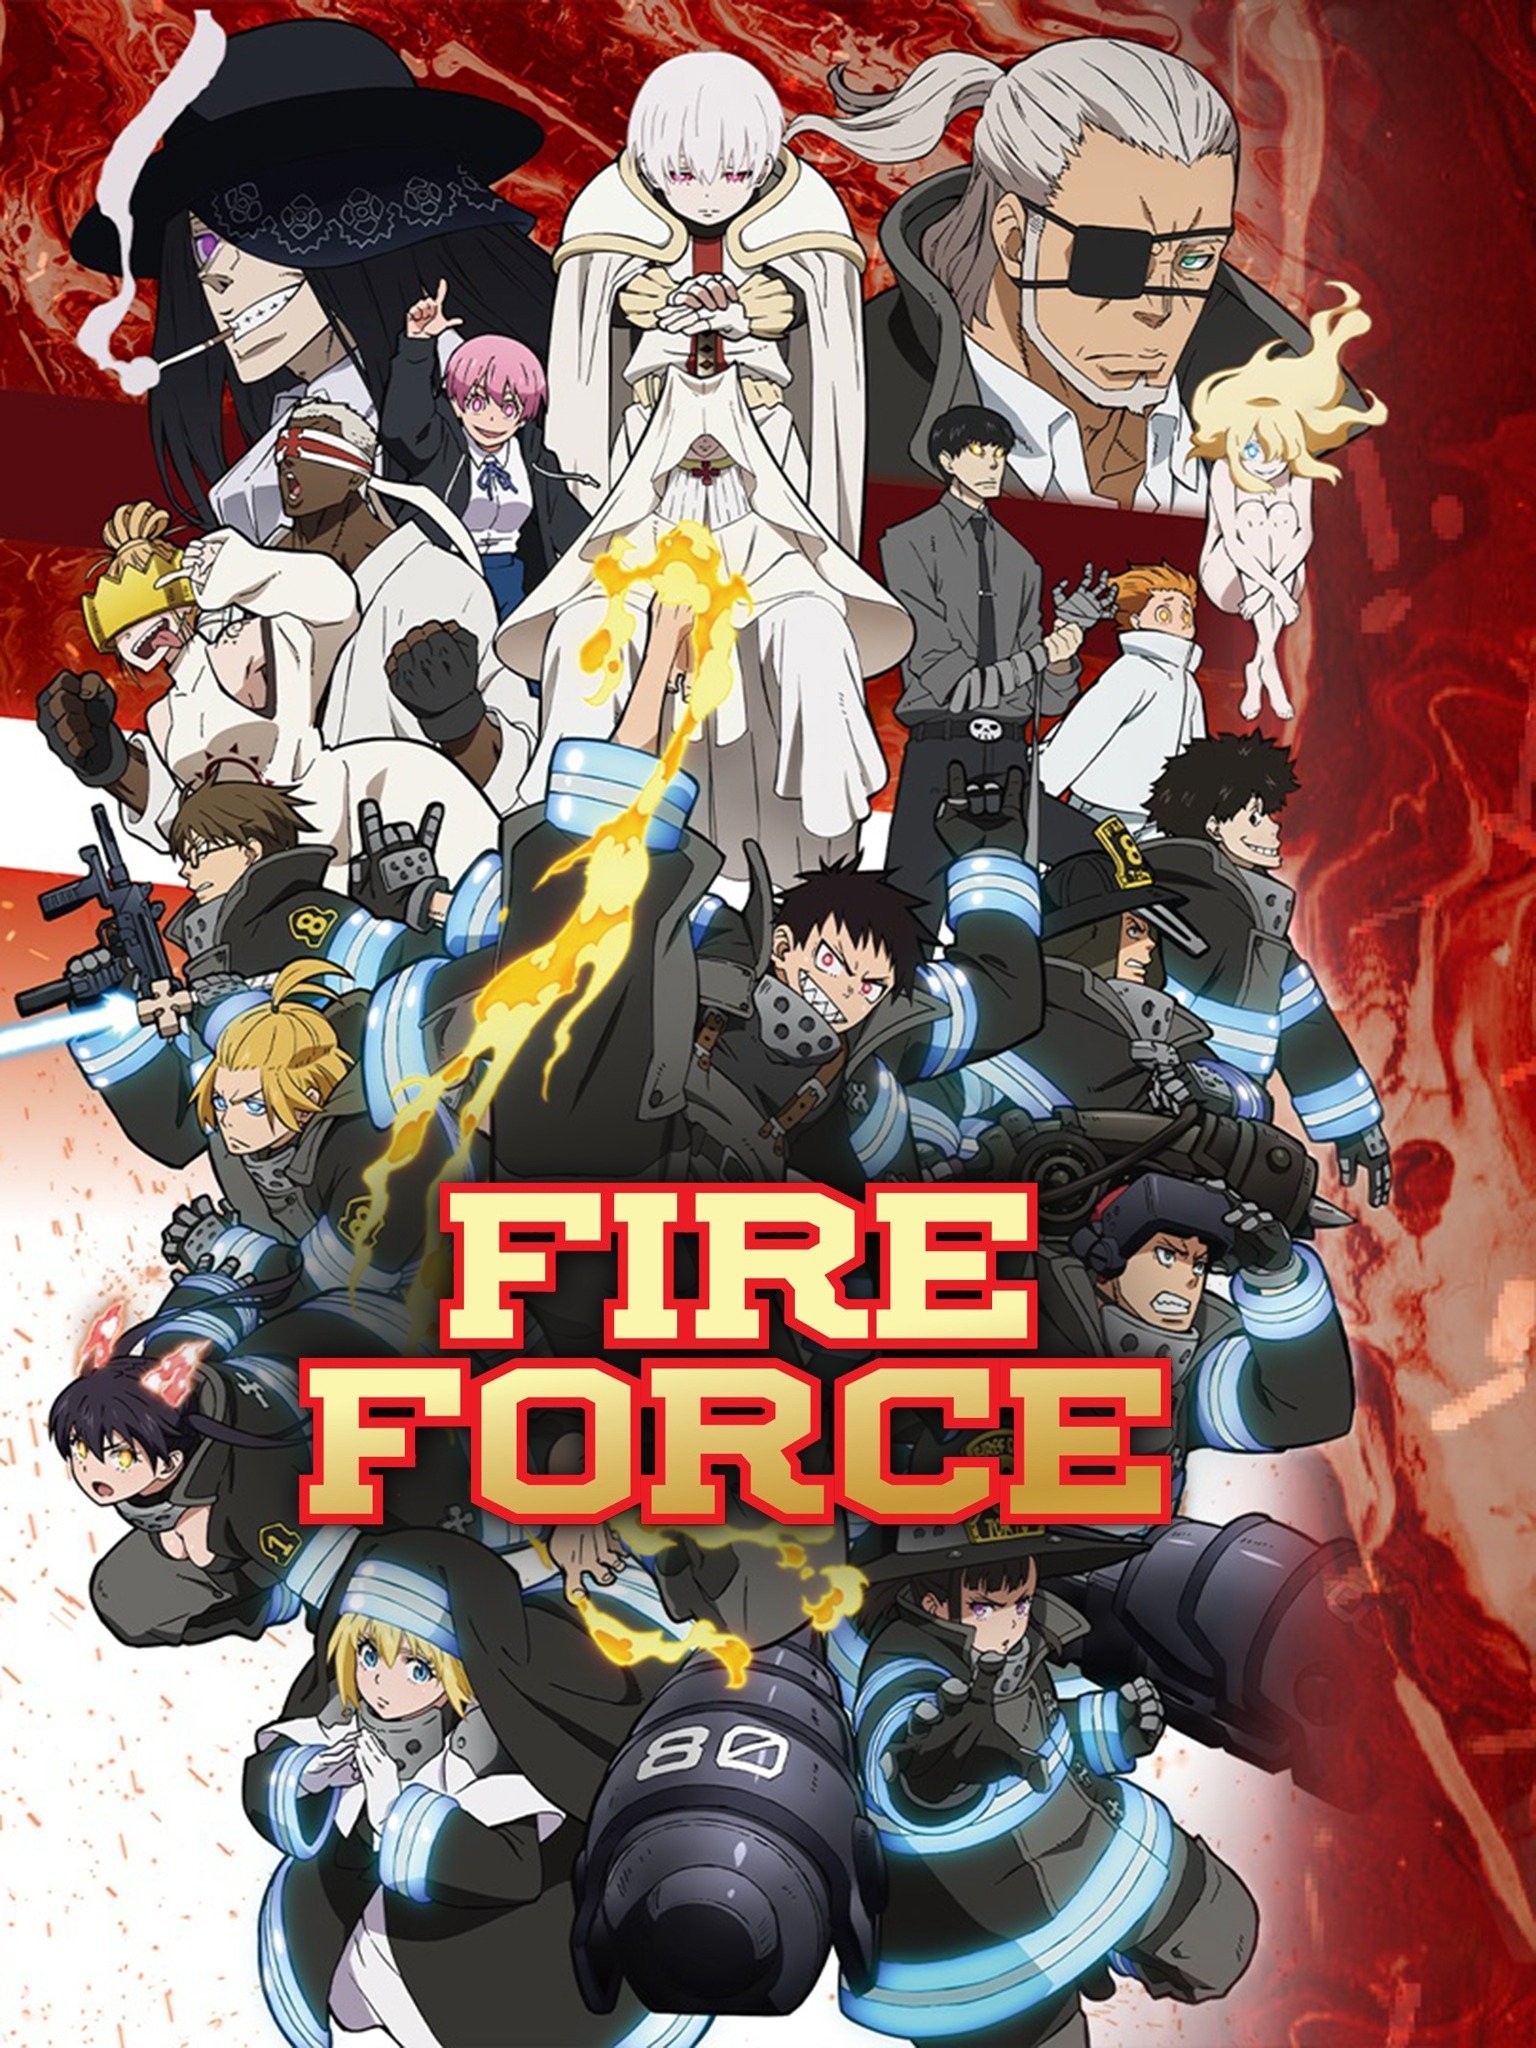 Fire Force TV Anime Casts Kenjiro Tsuda as Joker - News - Anime News Network